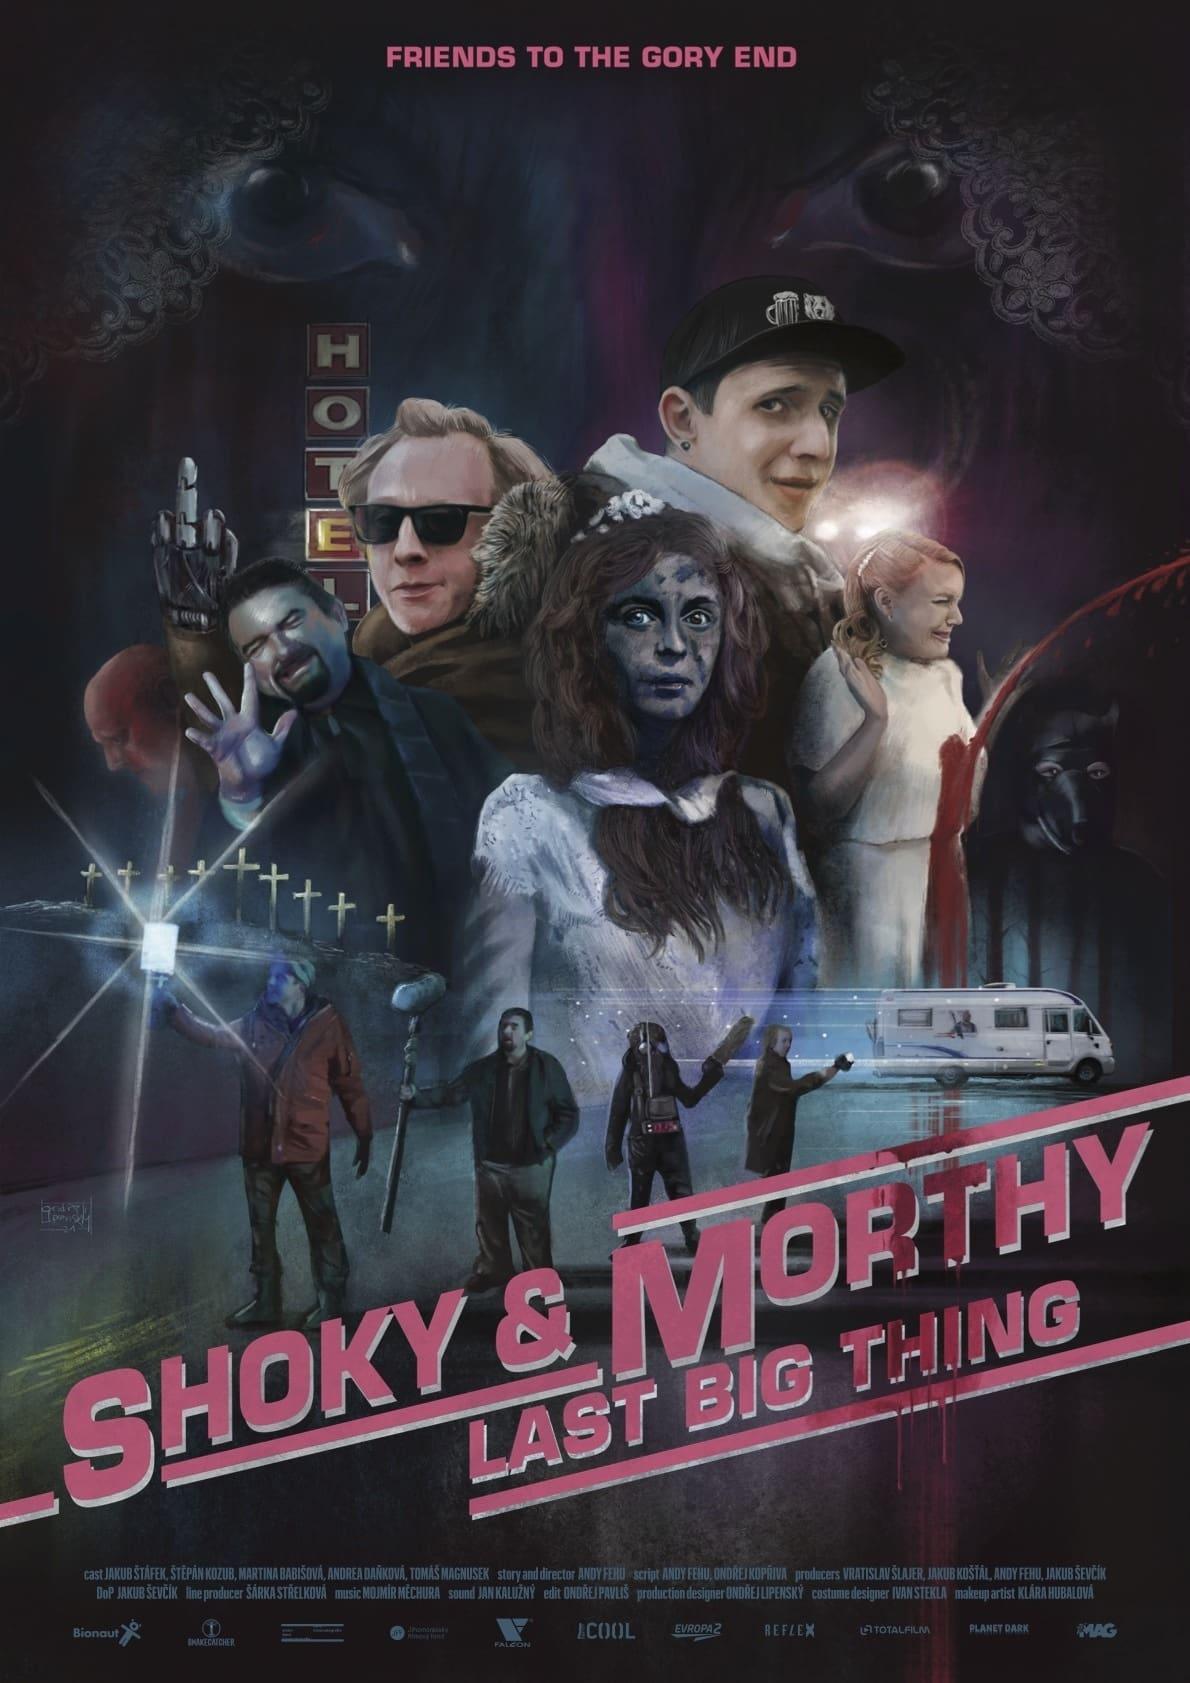 Shoky & Morthy: Last Big Thing poster